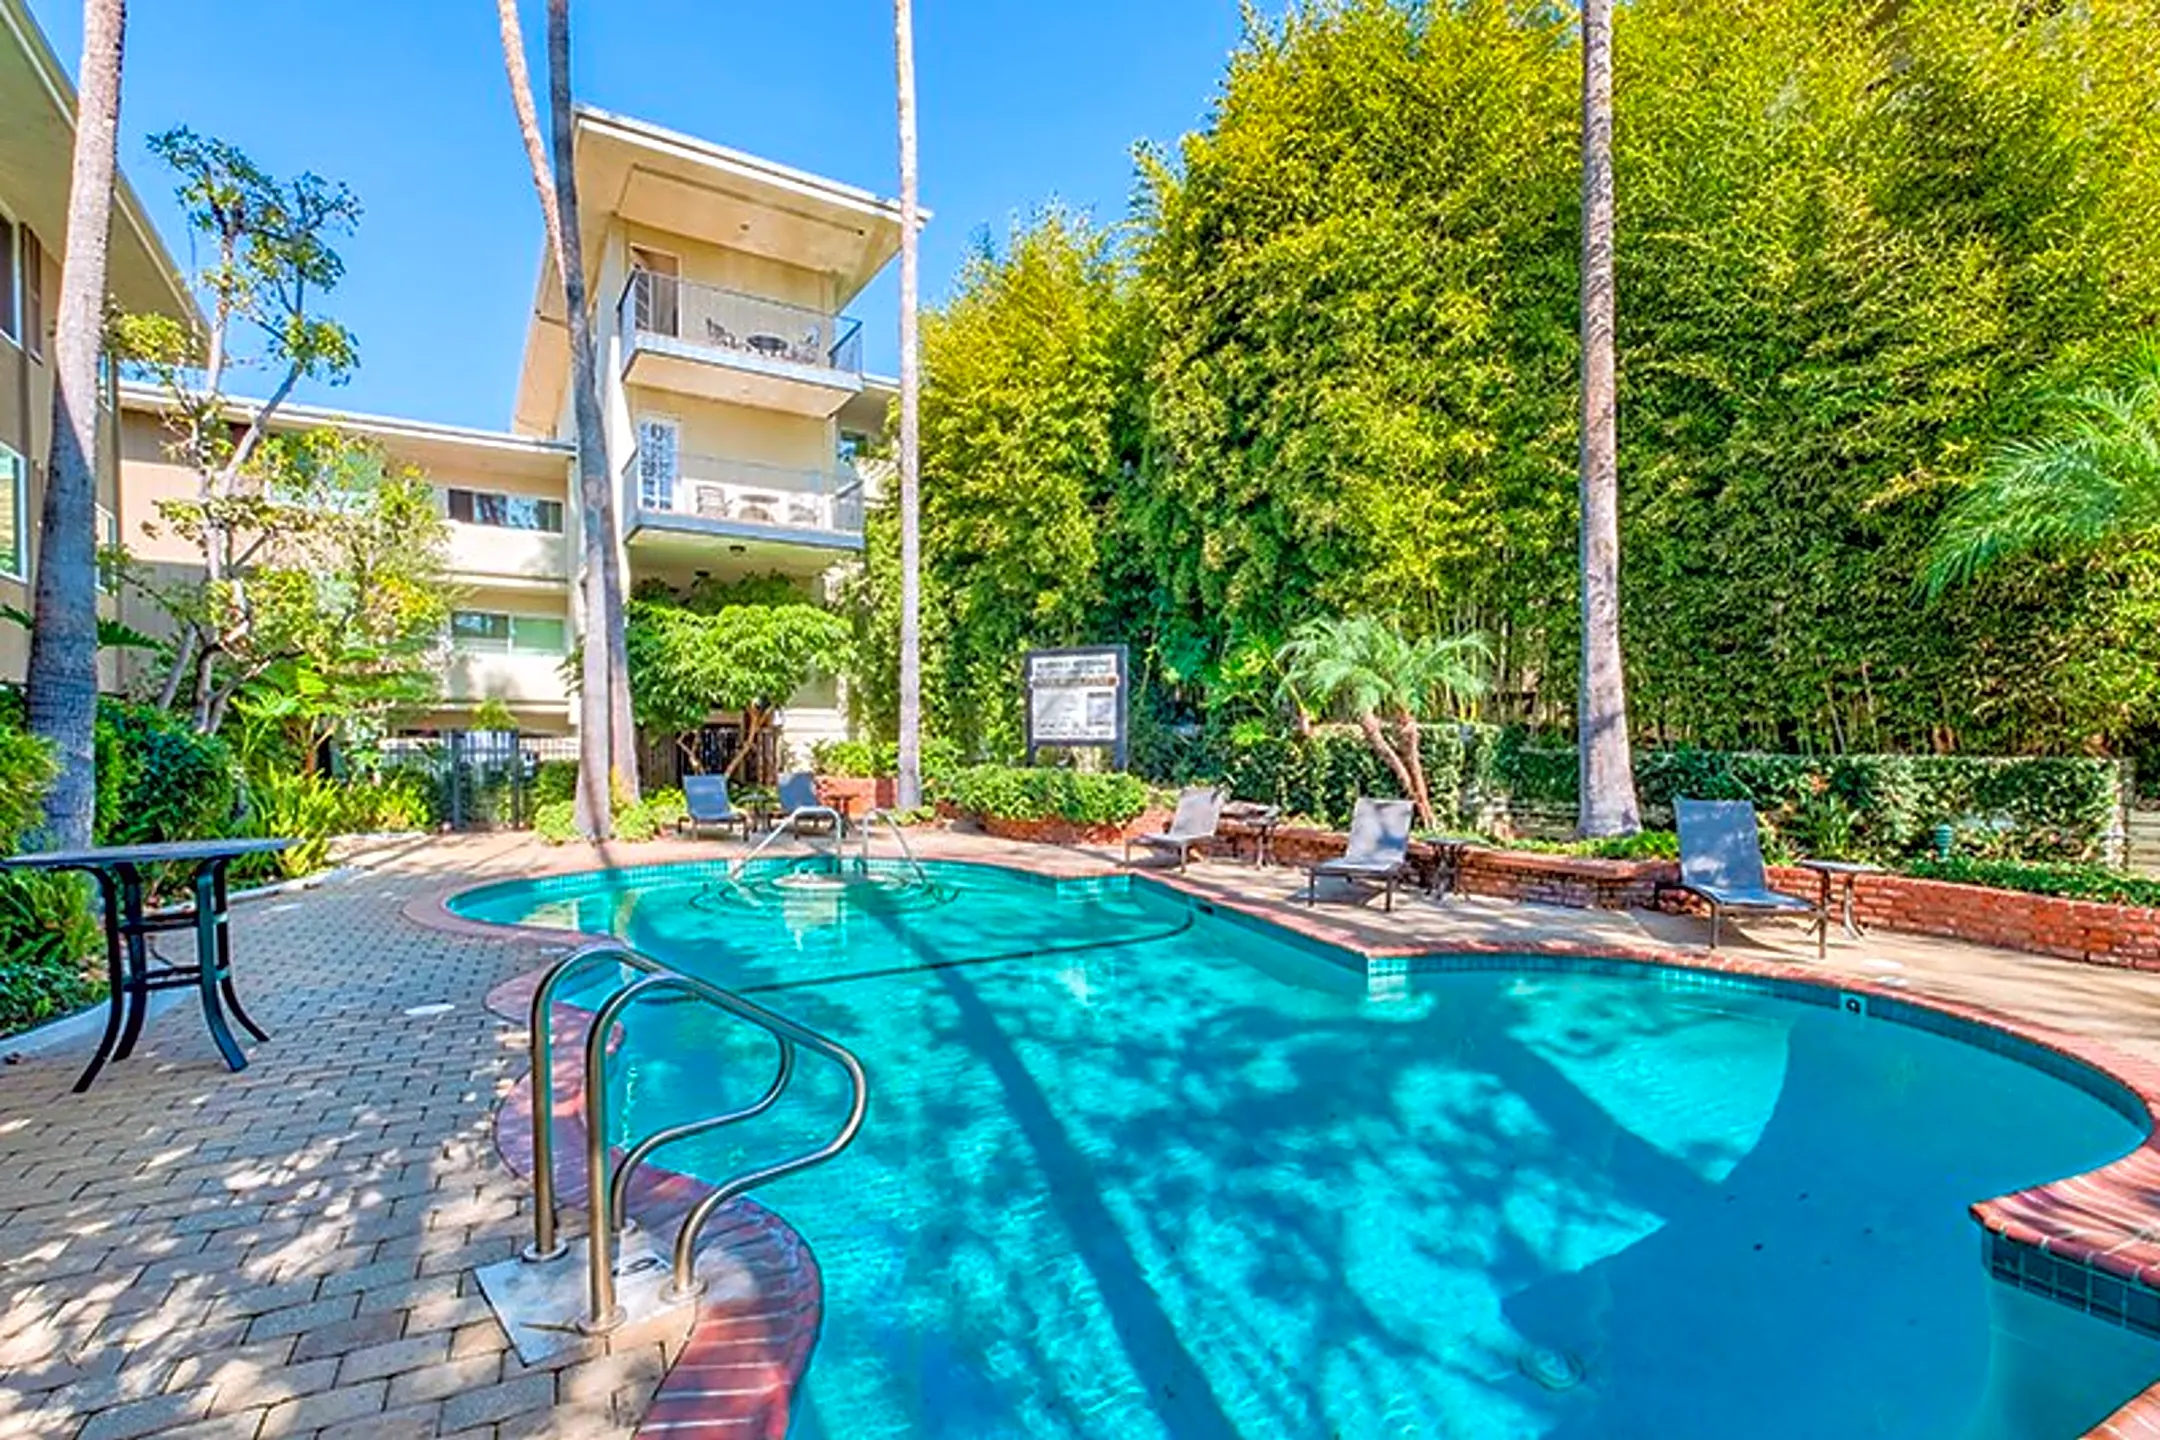 Pool - Sunset Barrington Gardens - Los Angeles, CA